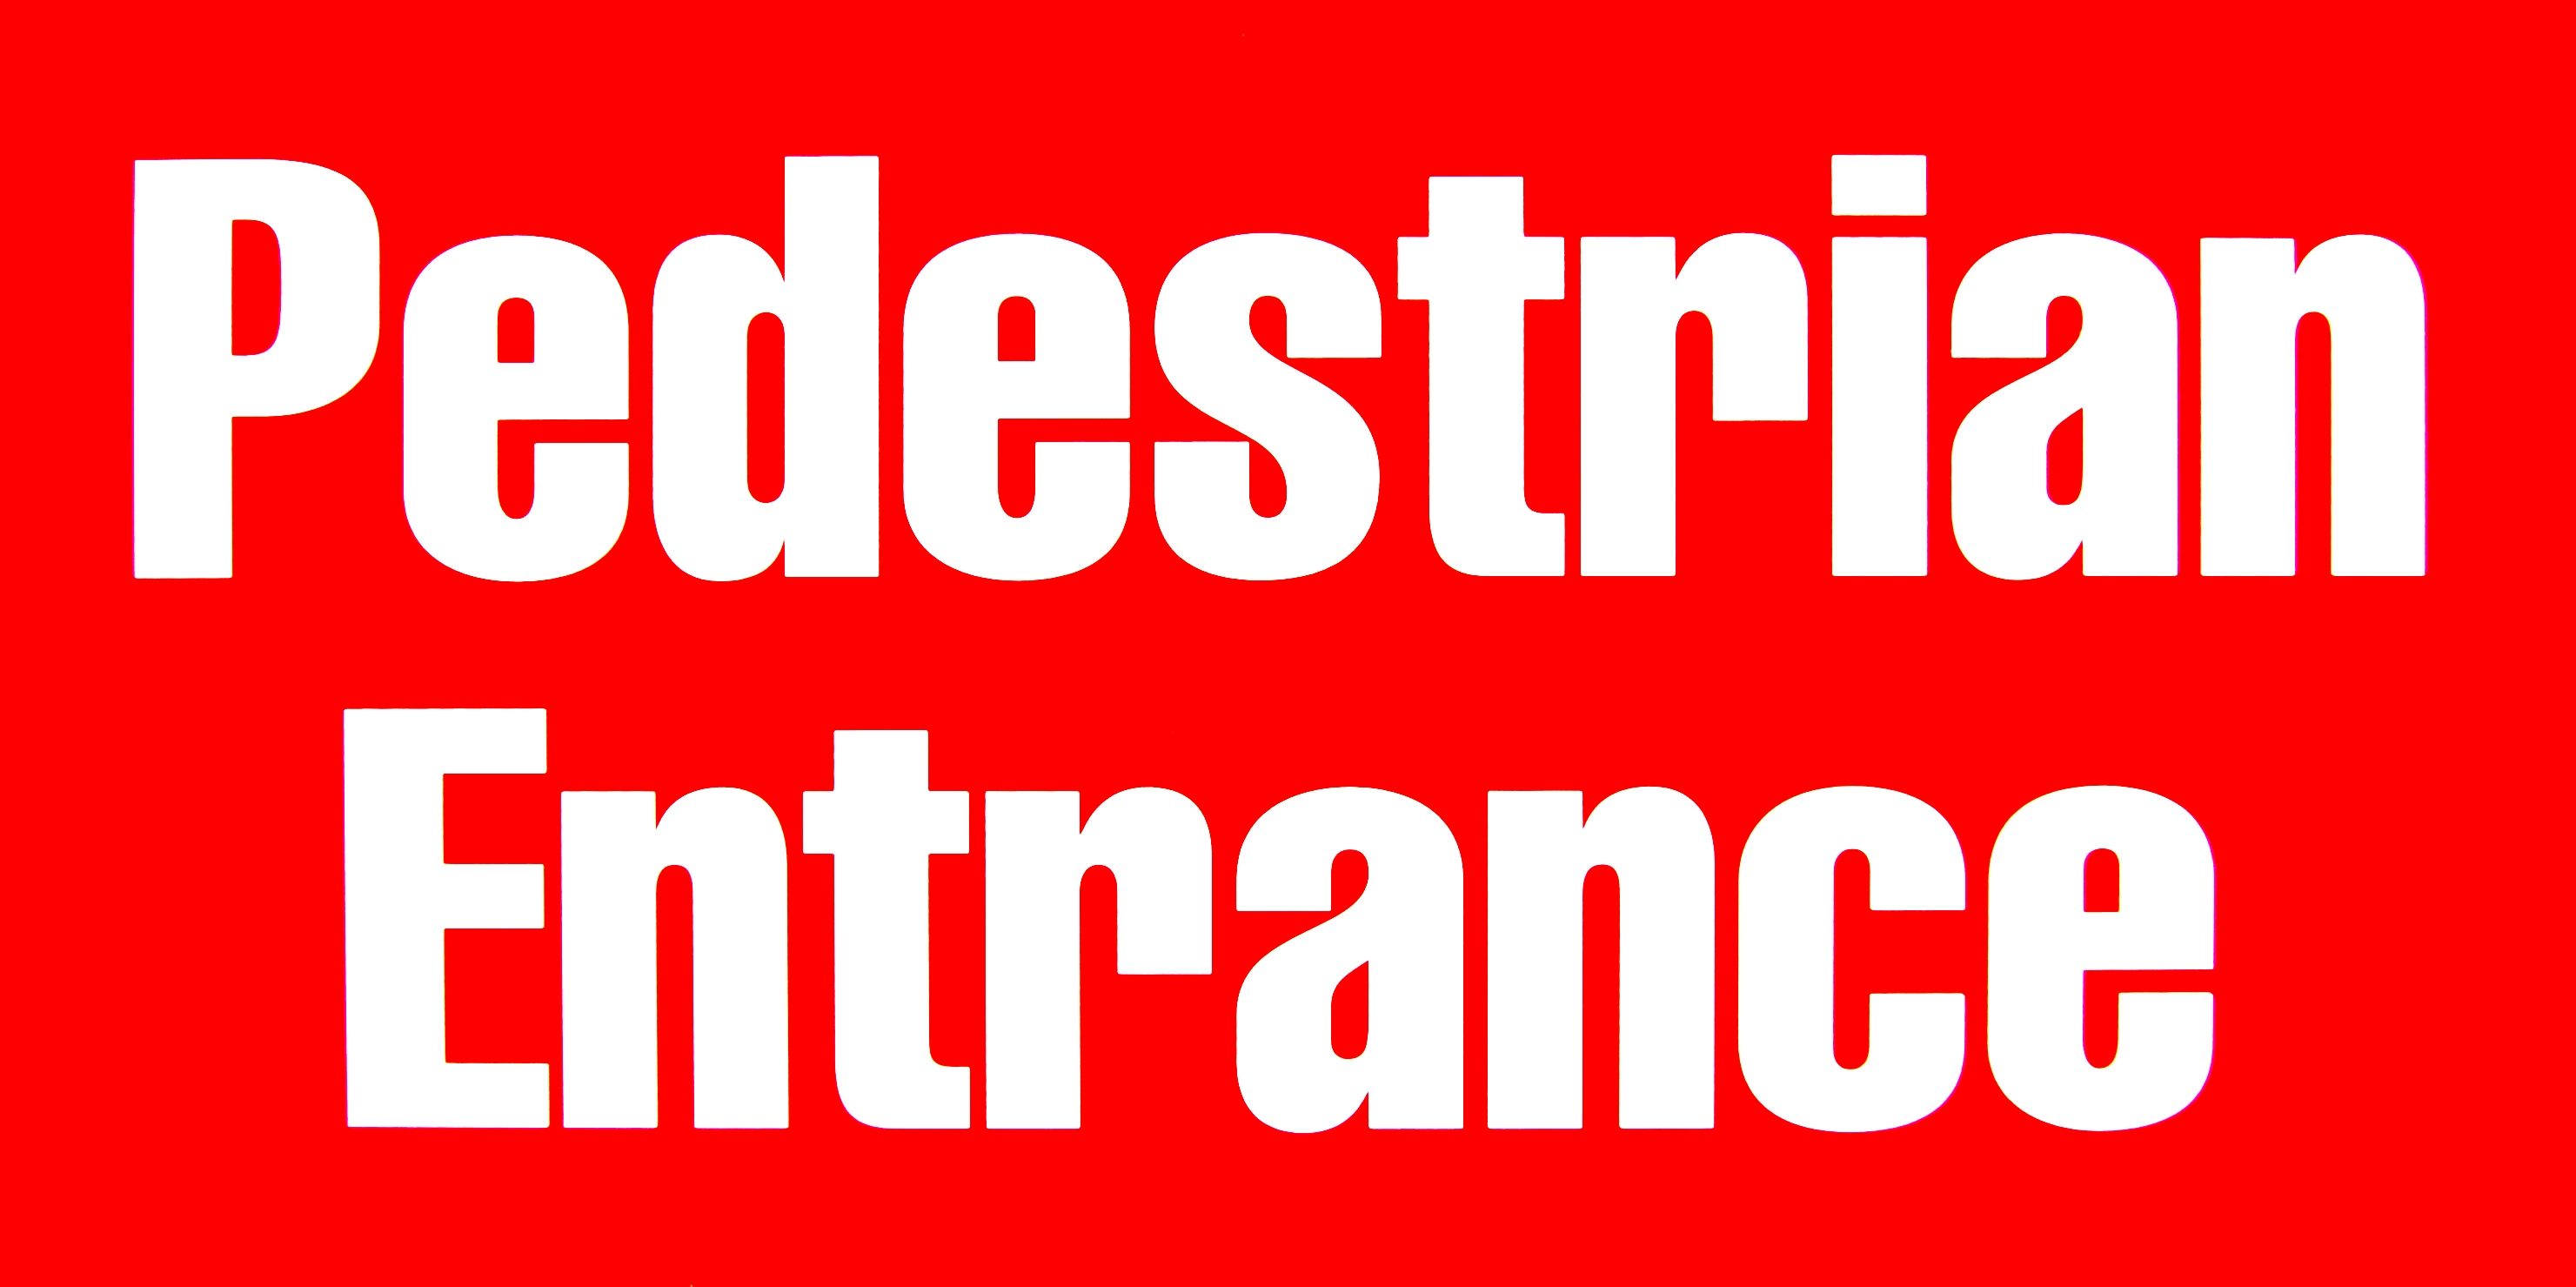 600 x 300 Pedestrian Entrance, red on white sign, 1.2mm rigid polypropylene